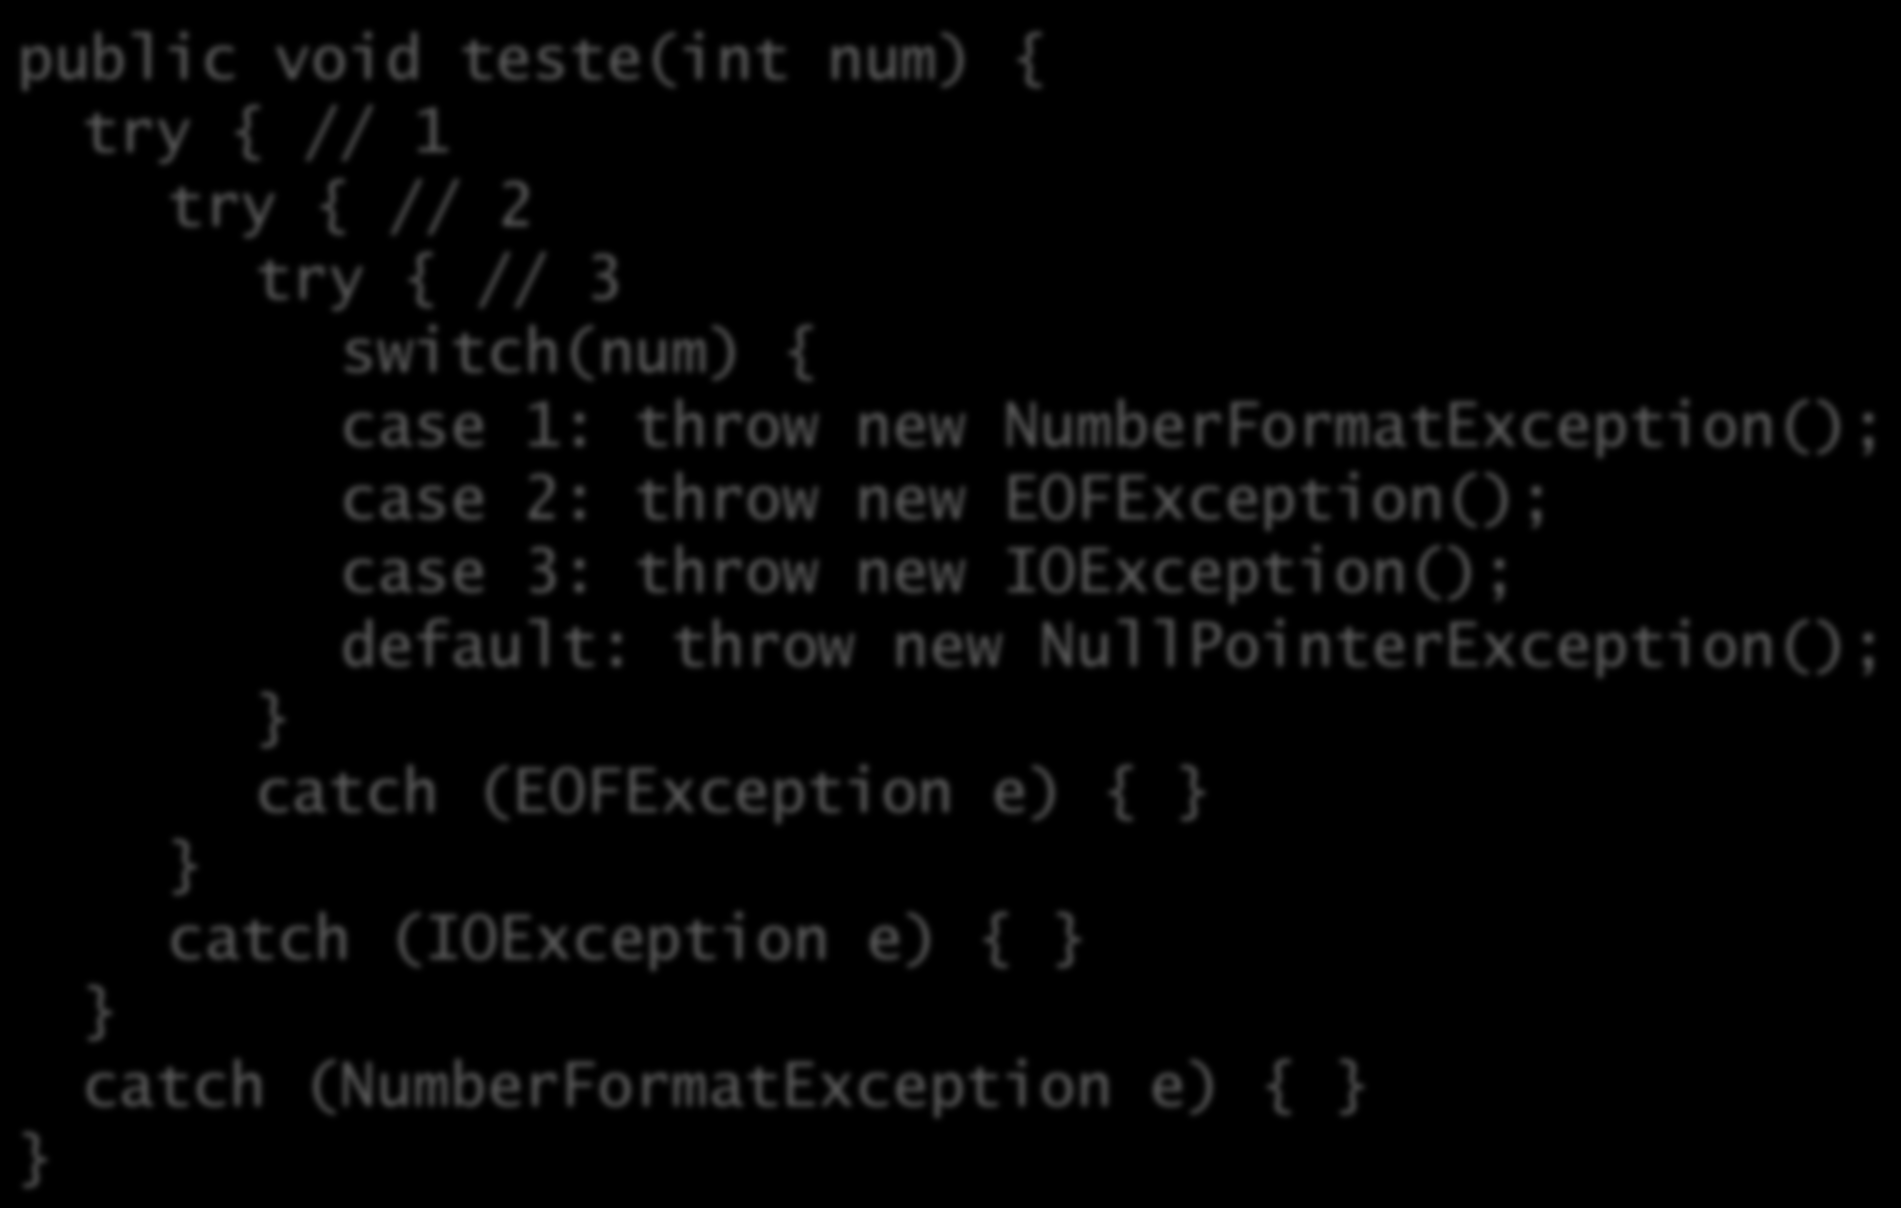 Propagação de exceções public void teste(int num) { try { // 1 try { // 2 try { // 3 switch(num) { case 1: throw new NumberFormatException(); case 2: throw new EOFException(); case 3: throw